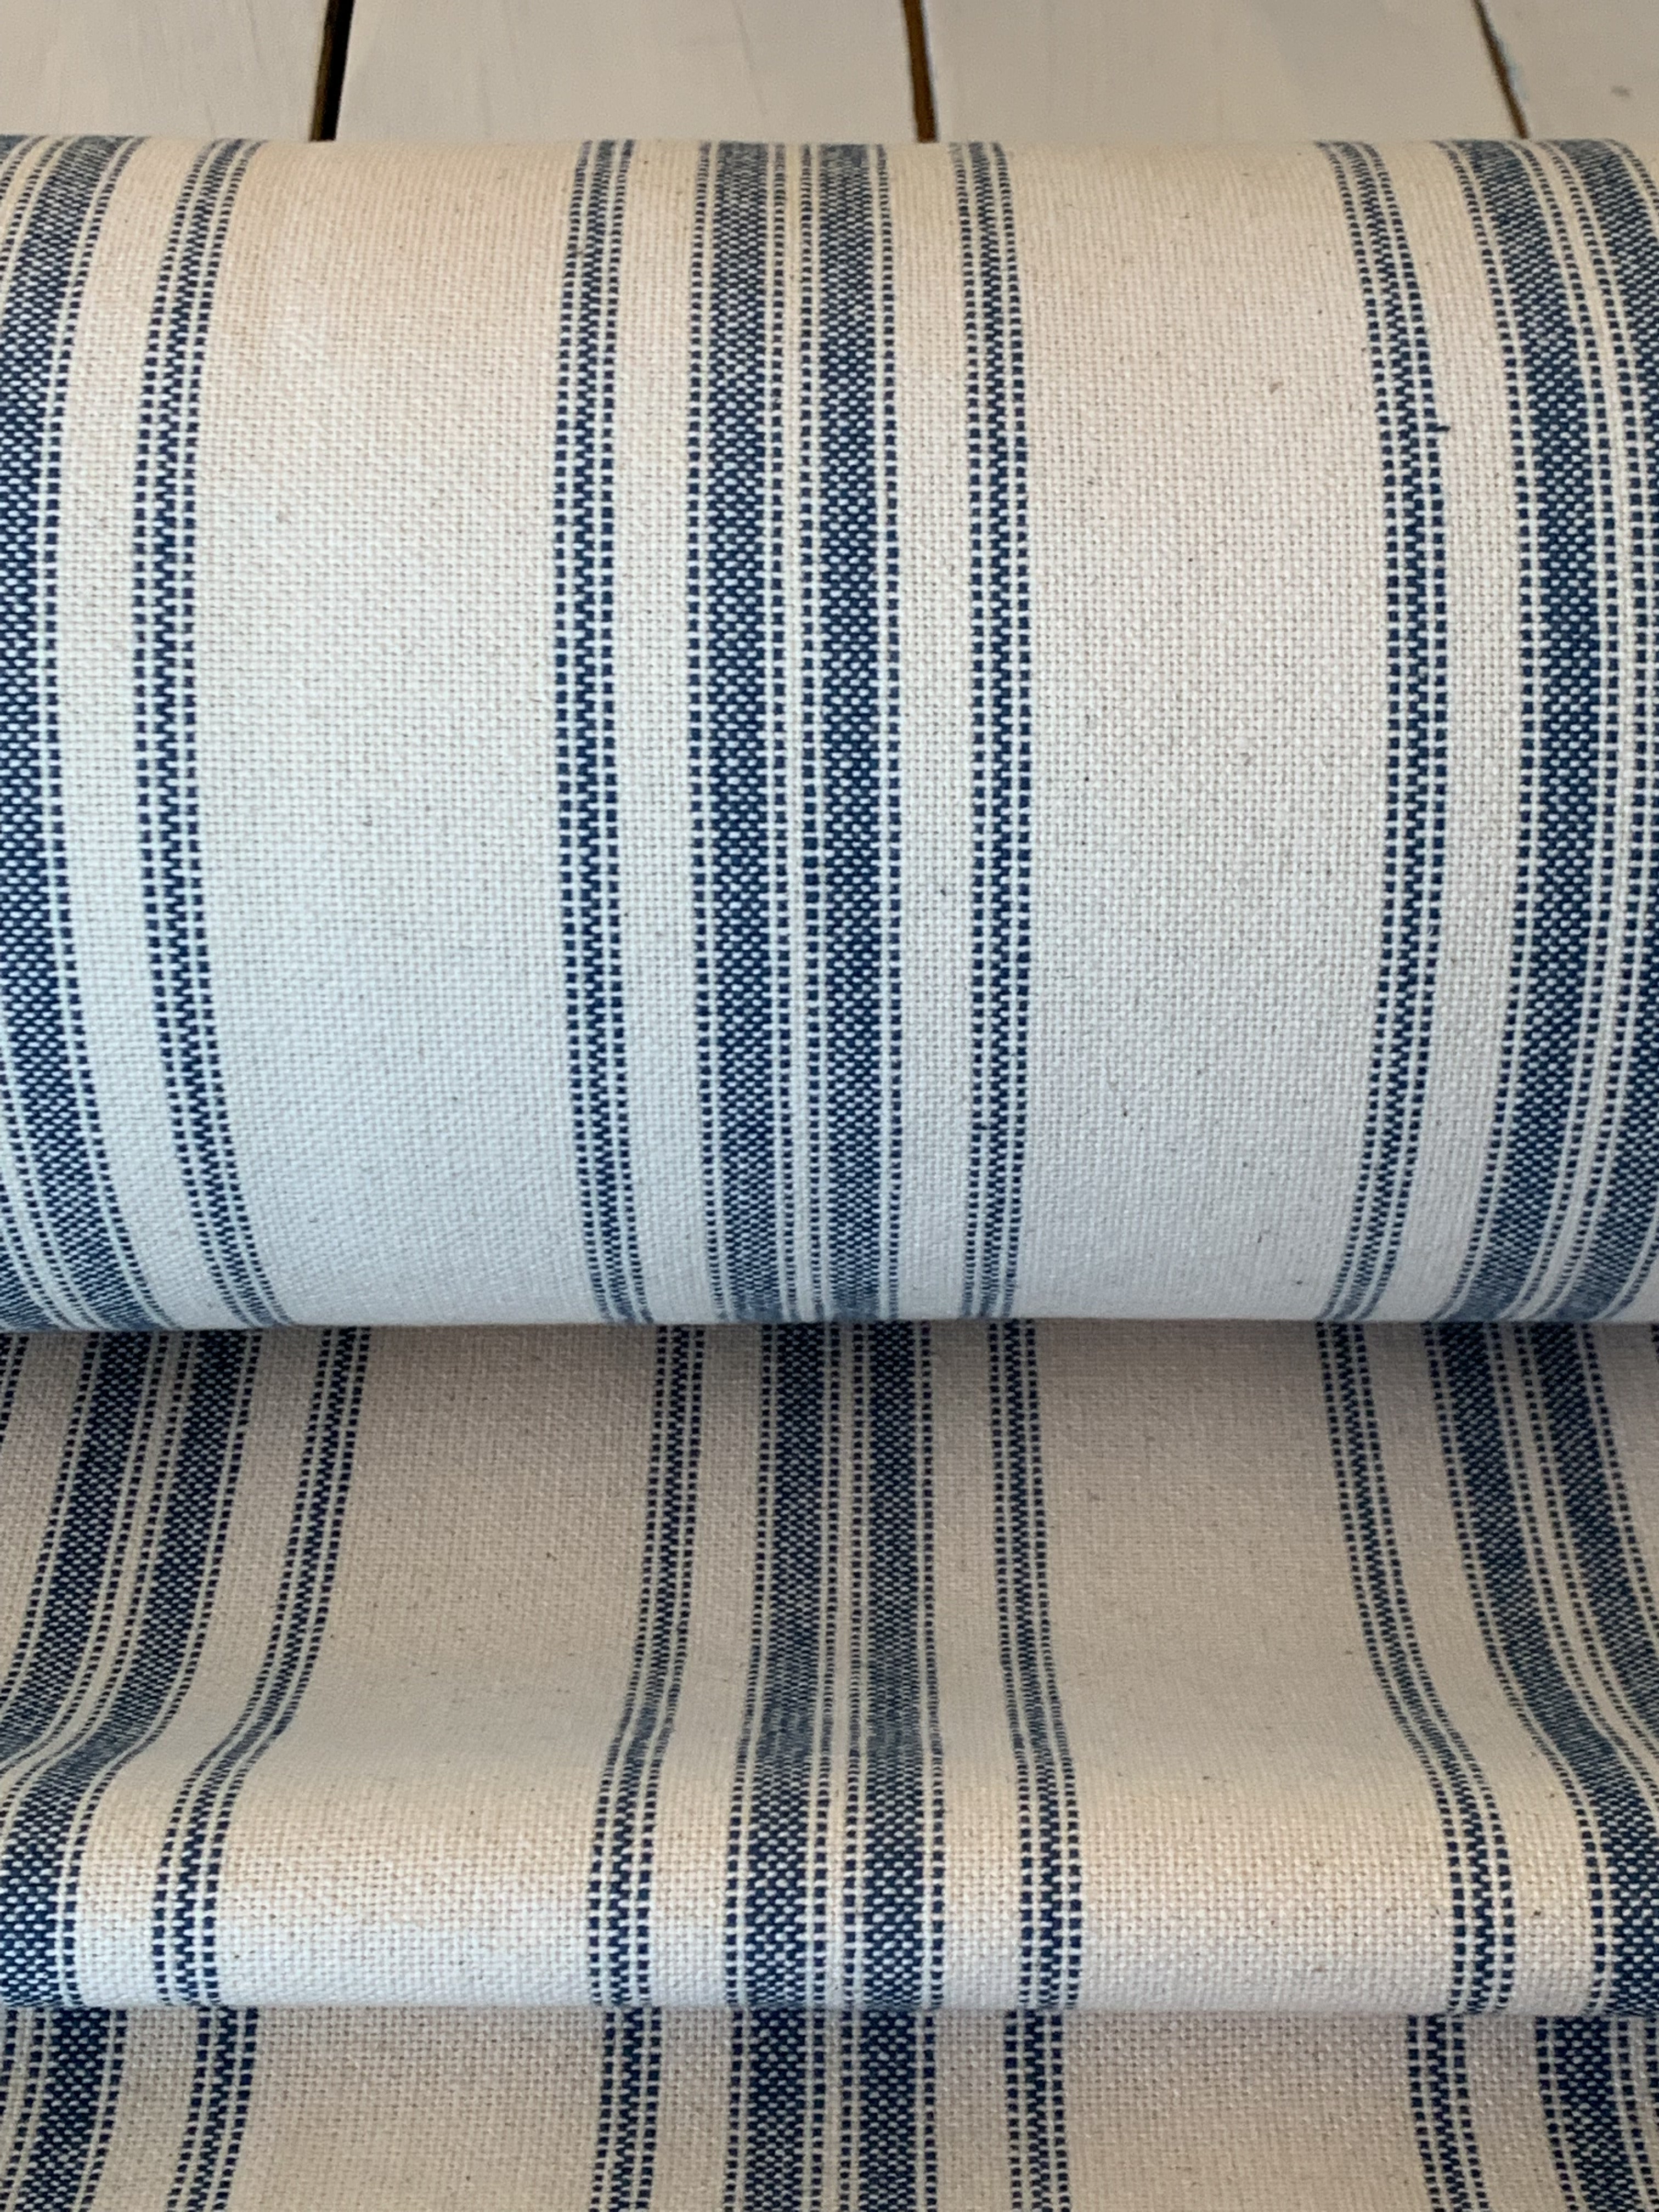 Our Exclusive 63" Blue on Cream Multi-Stripe - Grain Sack Fabric